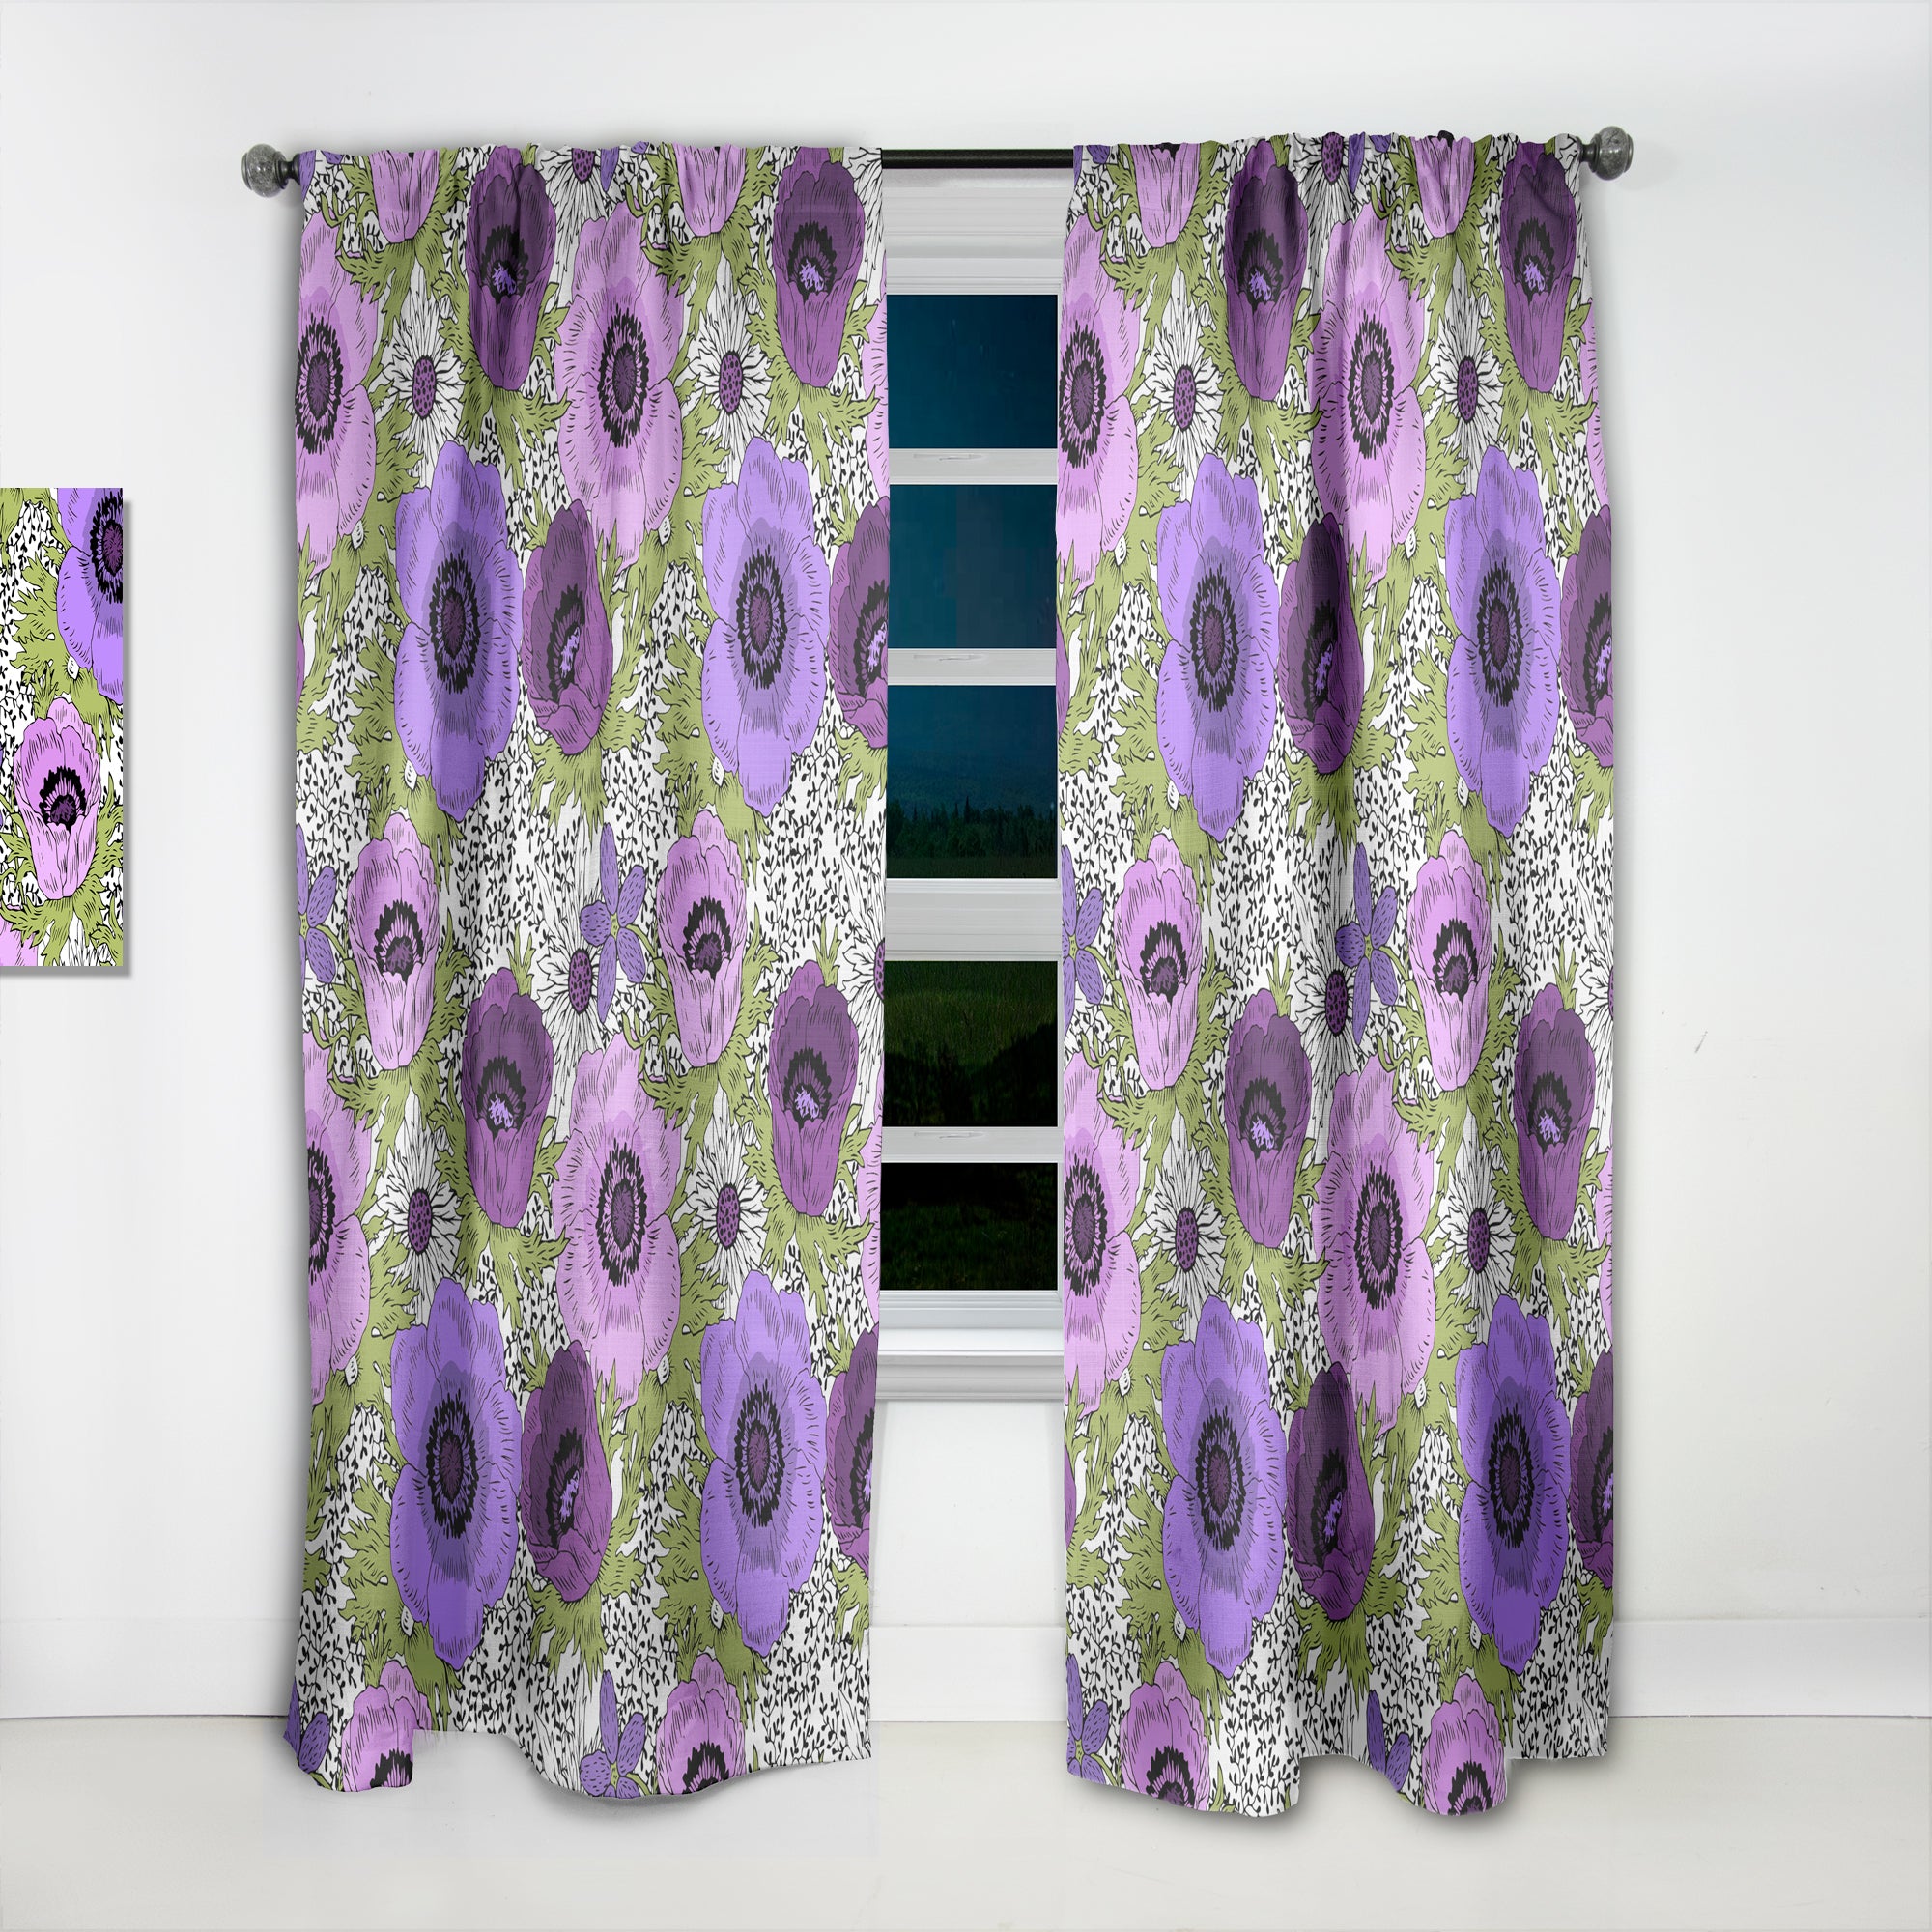 Designart 'Purple Retro Fantasy Flowers' Mid-Century Modern Curtain Panel